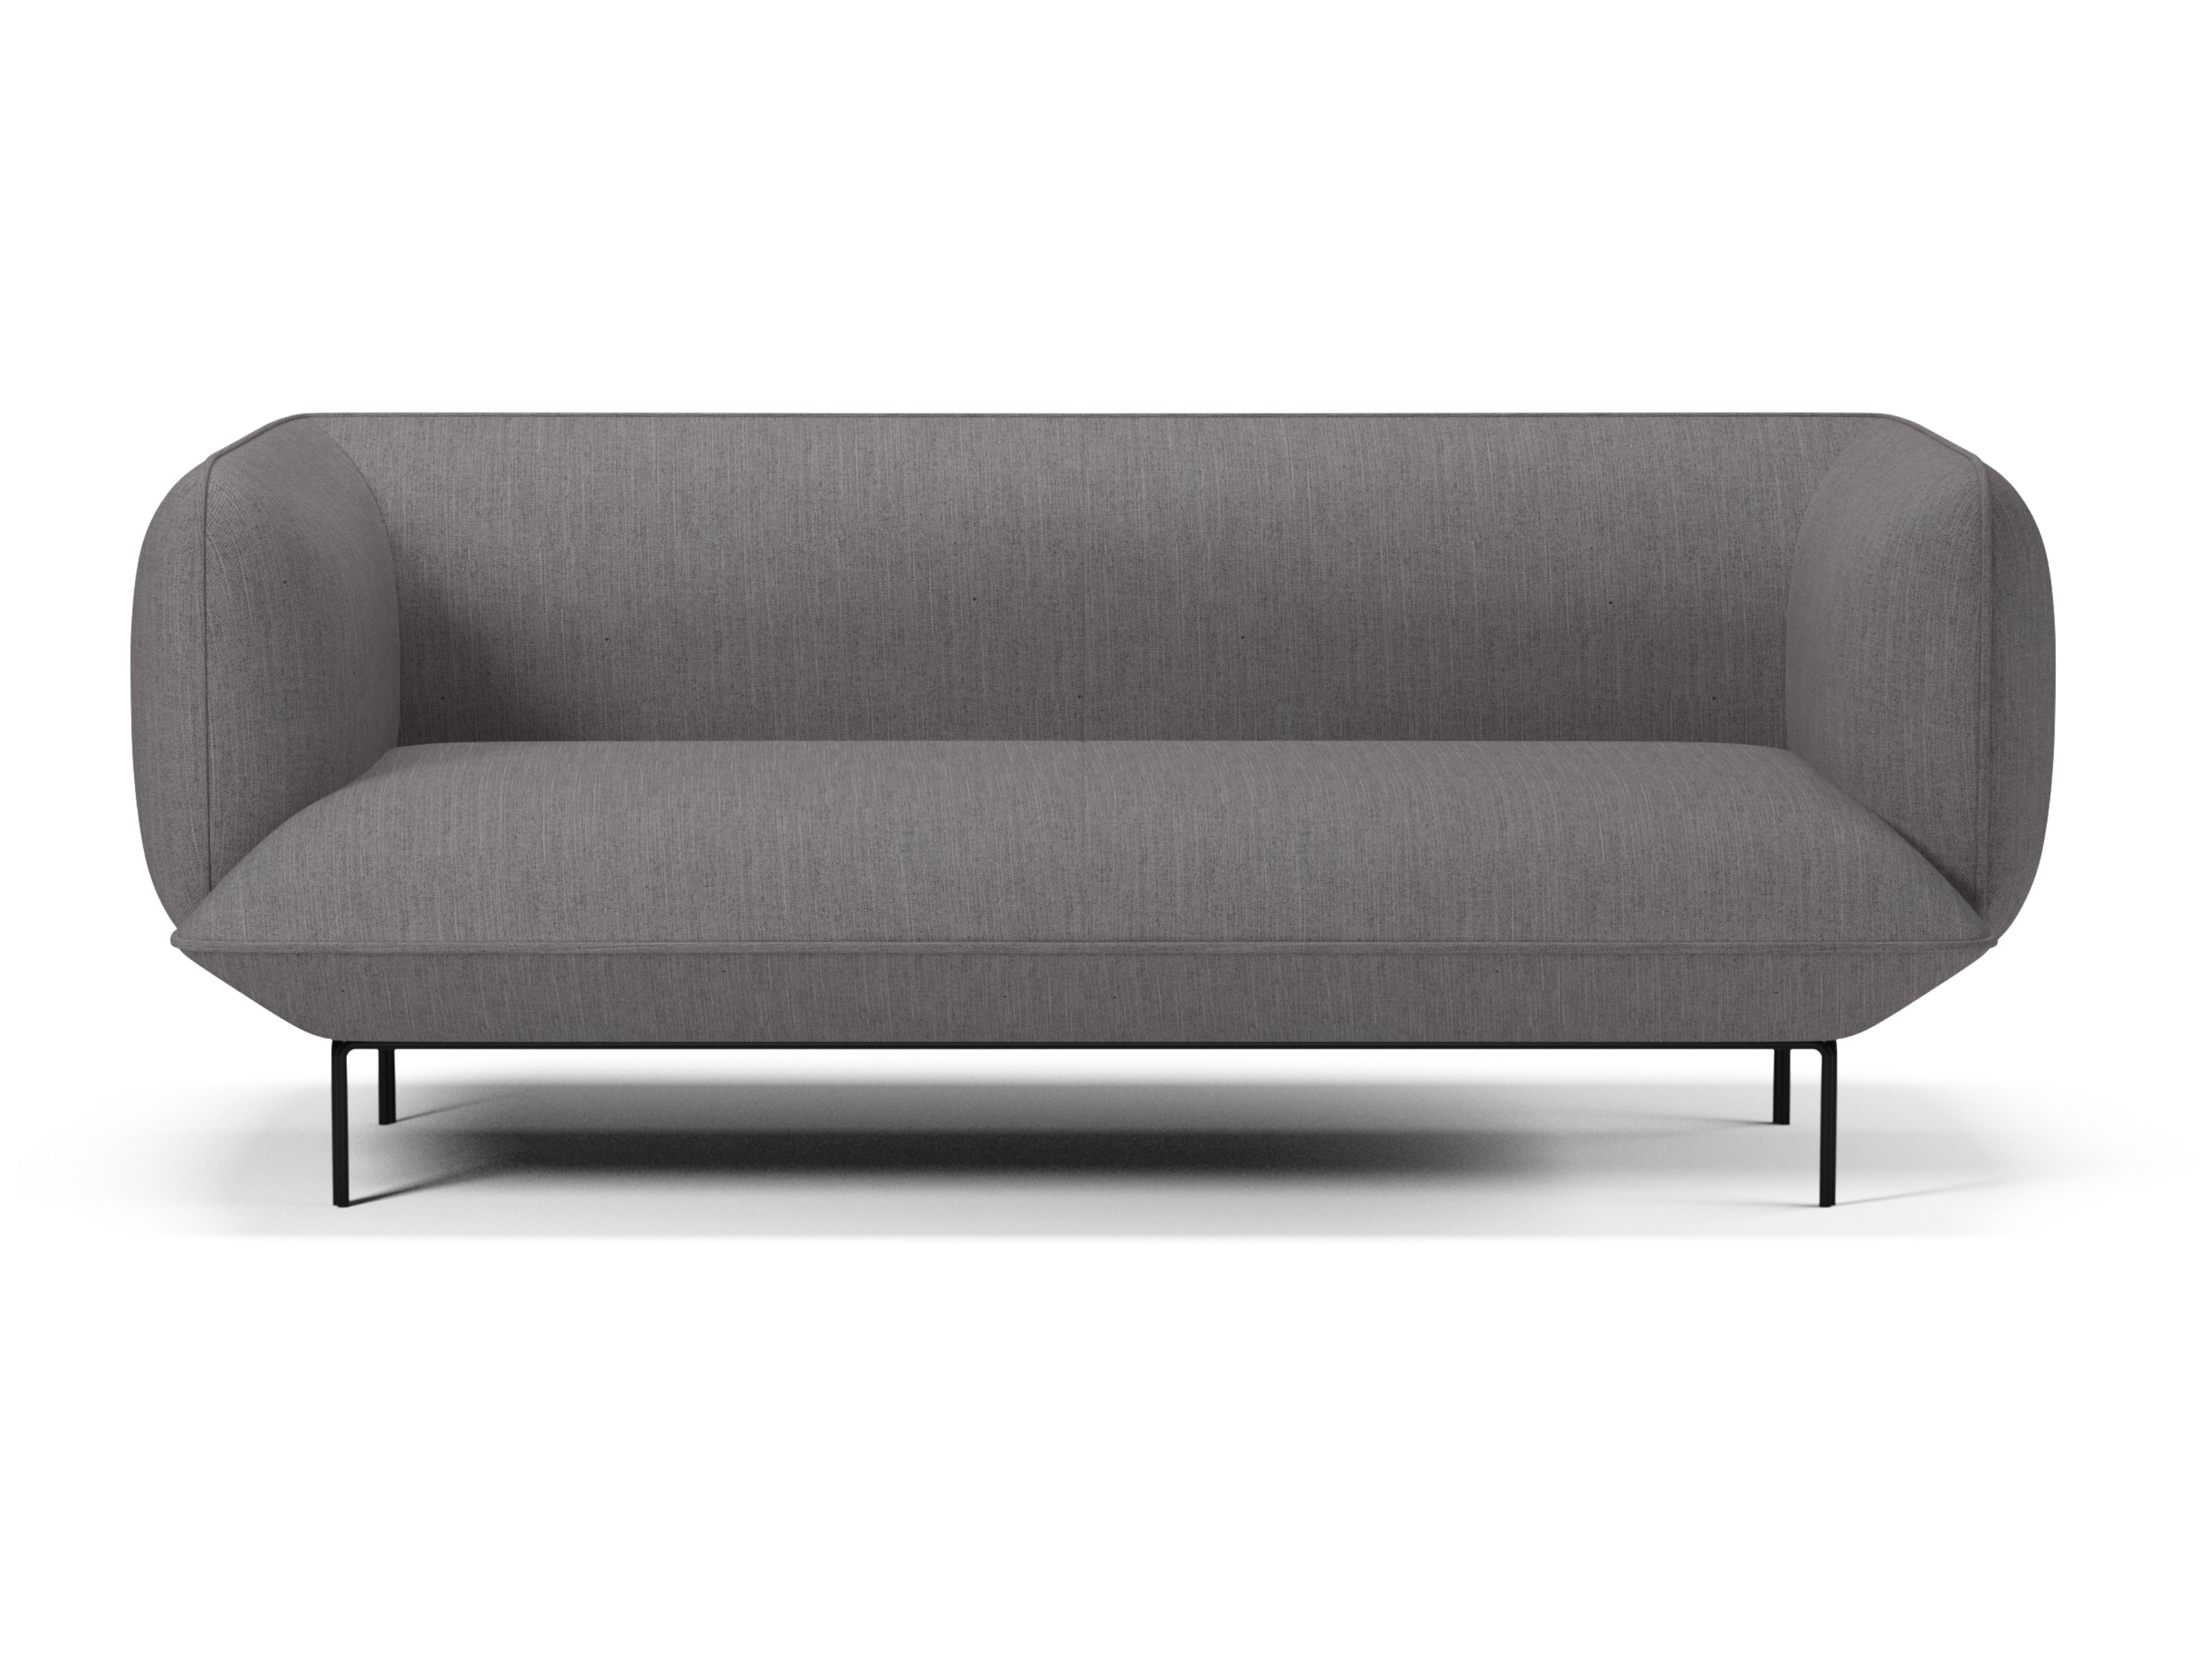 Cloud Lounge Sofa By Bolia Steelcase